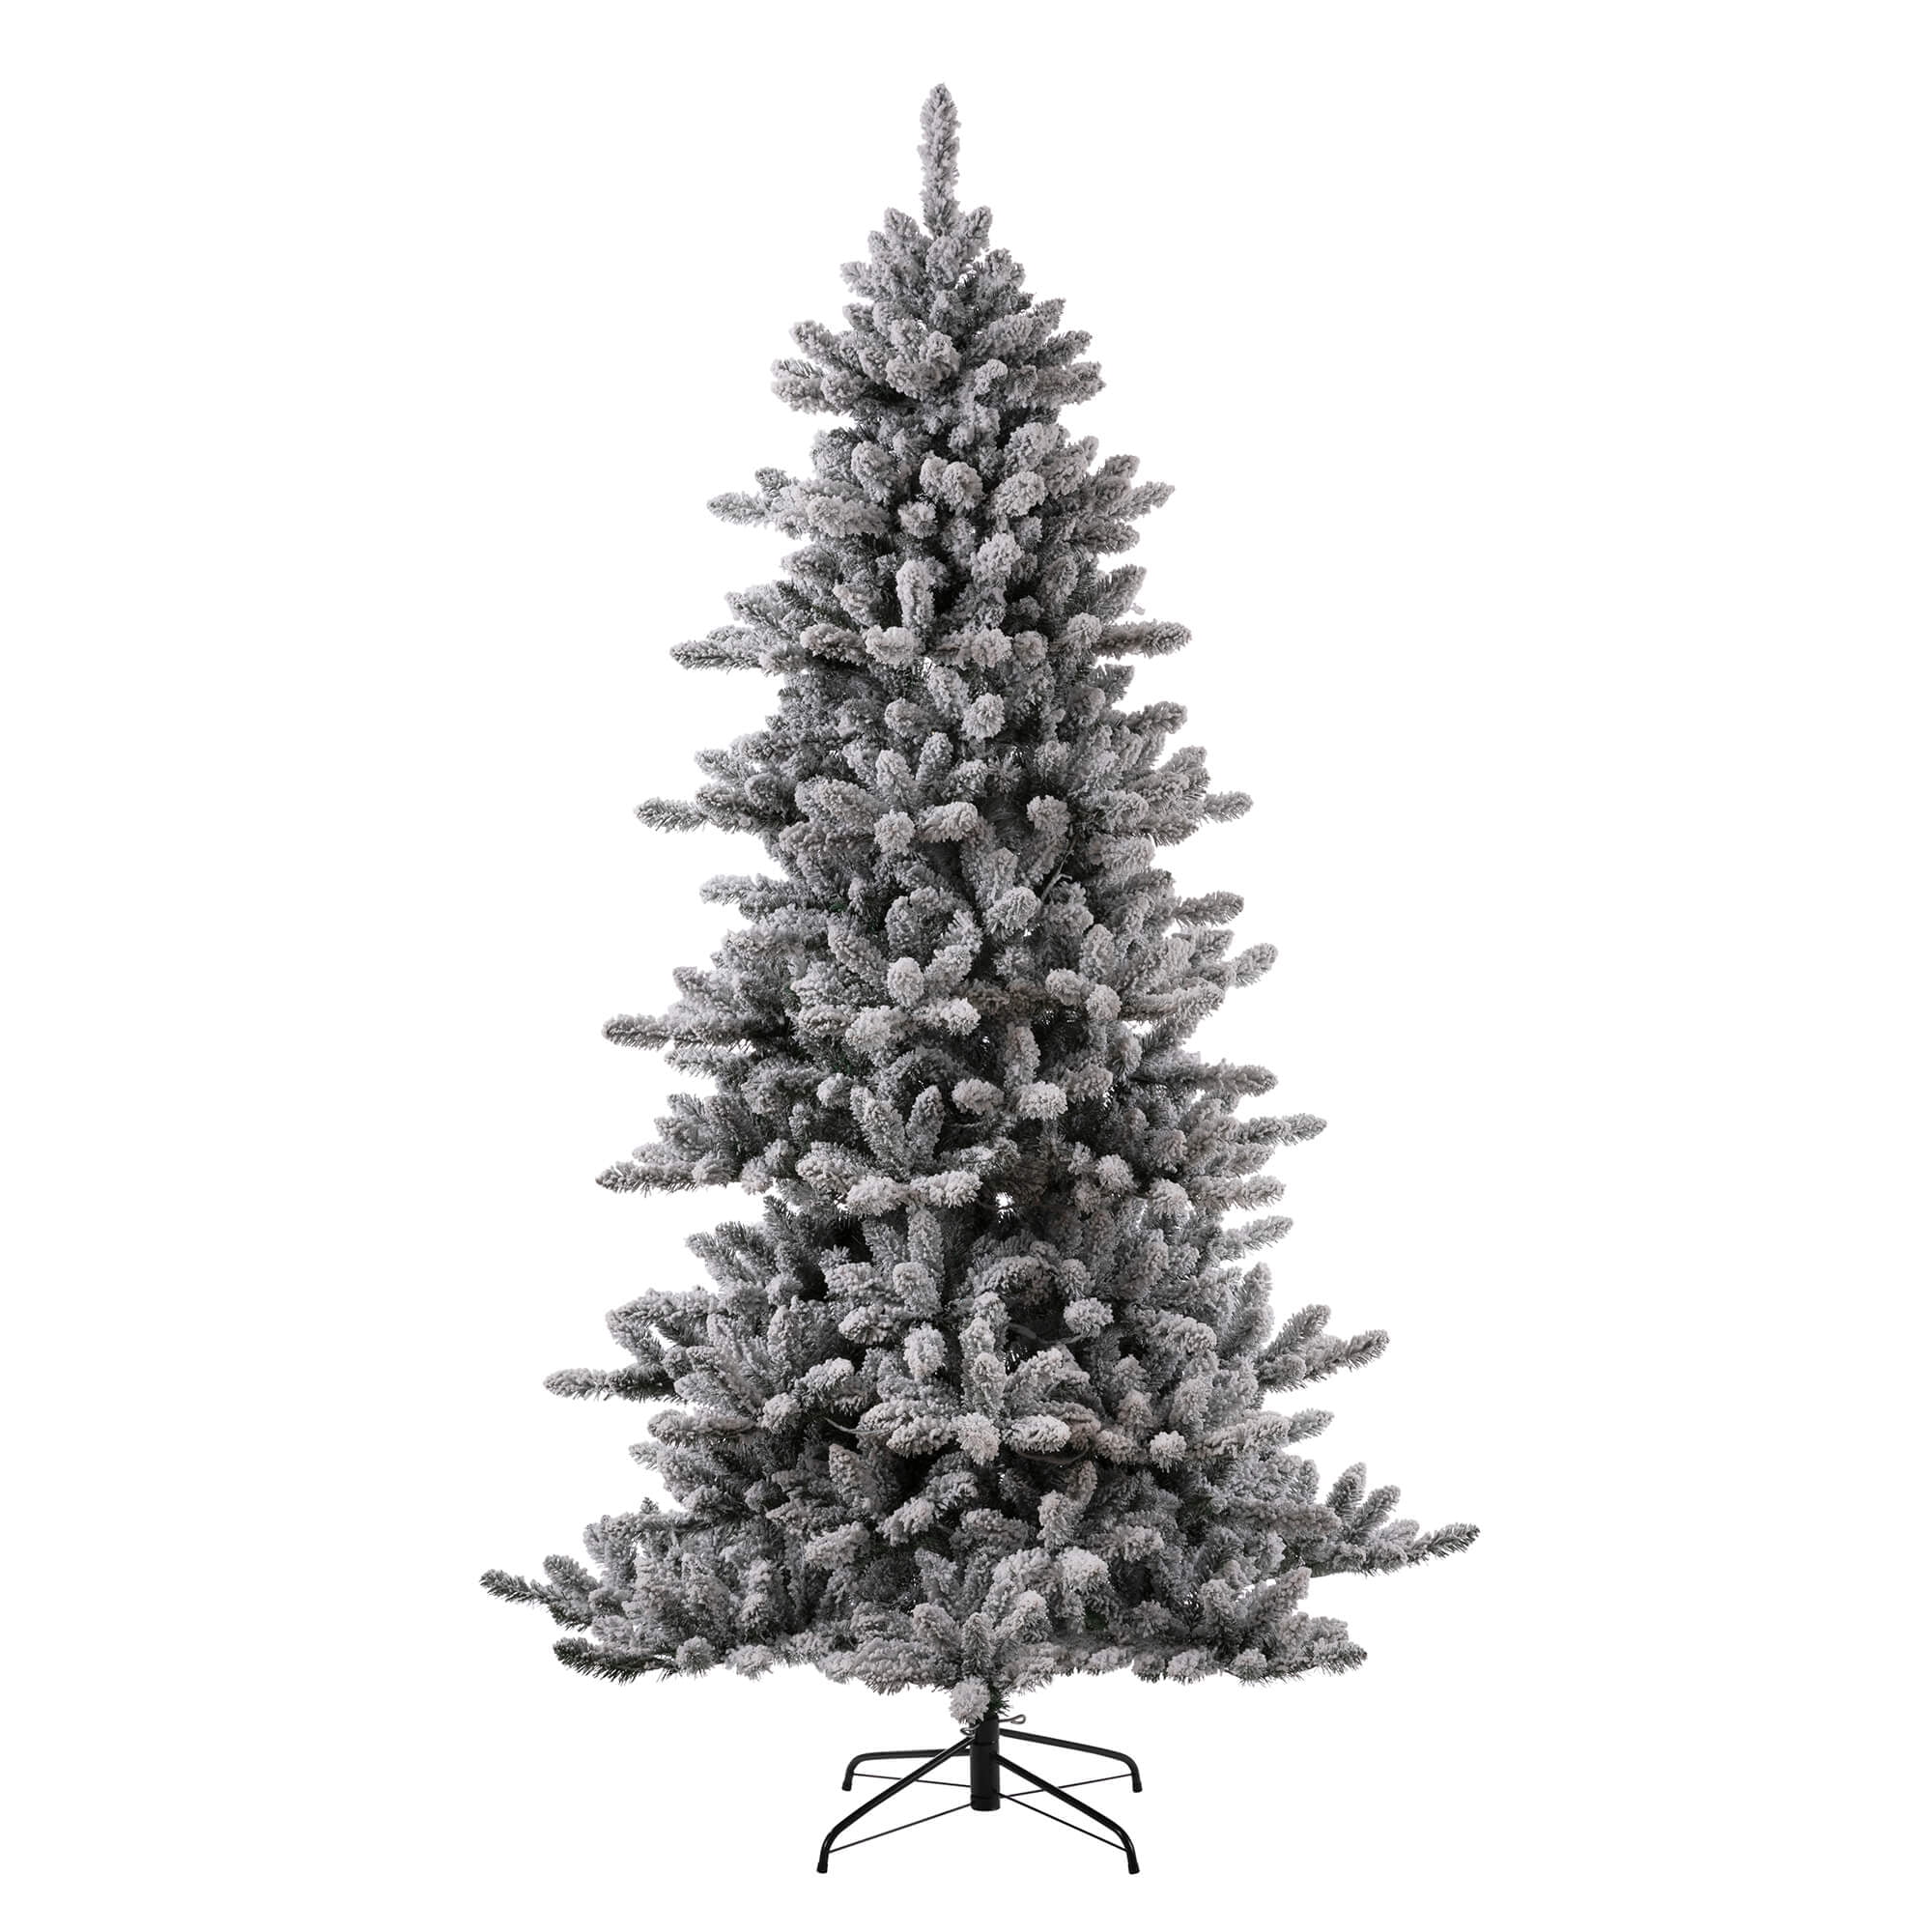 BlackBox Christmas tree - Itree 